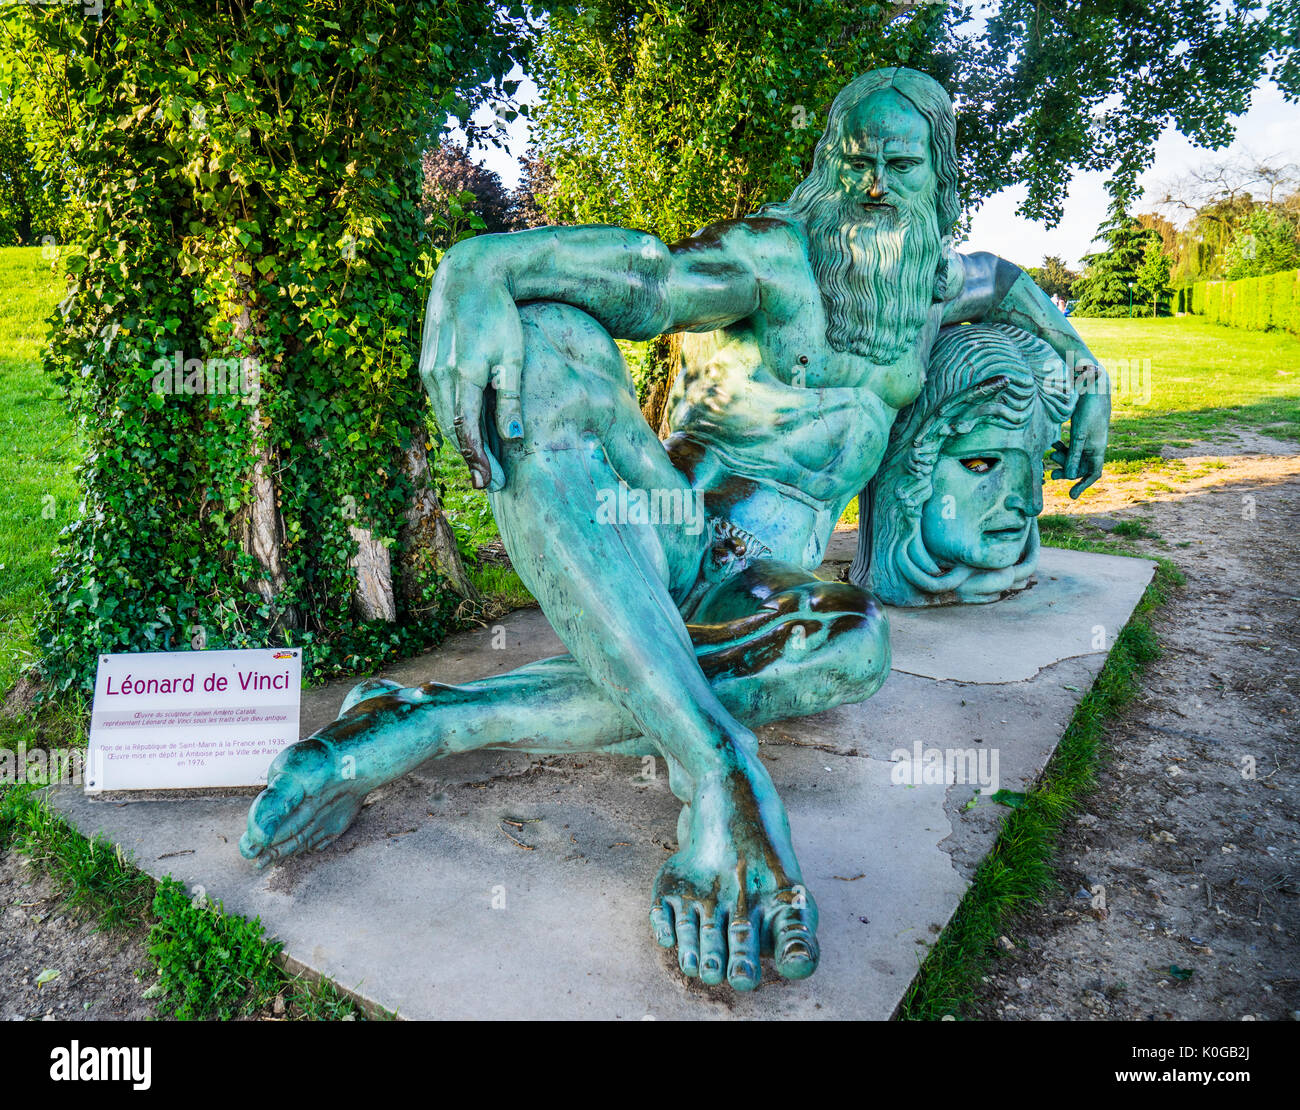 France, Centre-Val de Loire, Ille d'Or, Amboise, bronce sculpture of Leonardo da Vinci in the style of an ancient god by the Italian sculptor Amleto C Stock Photo